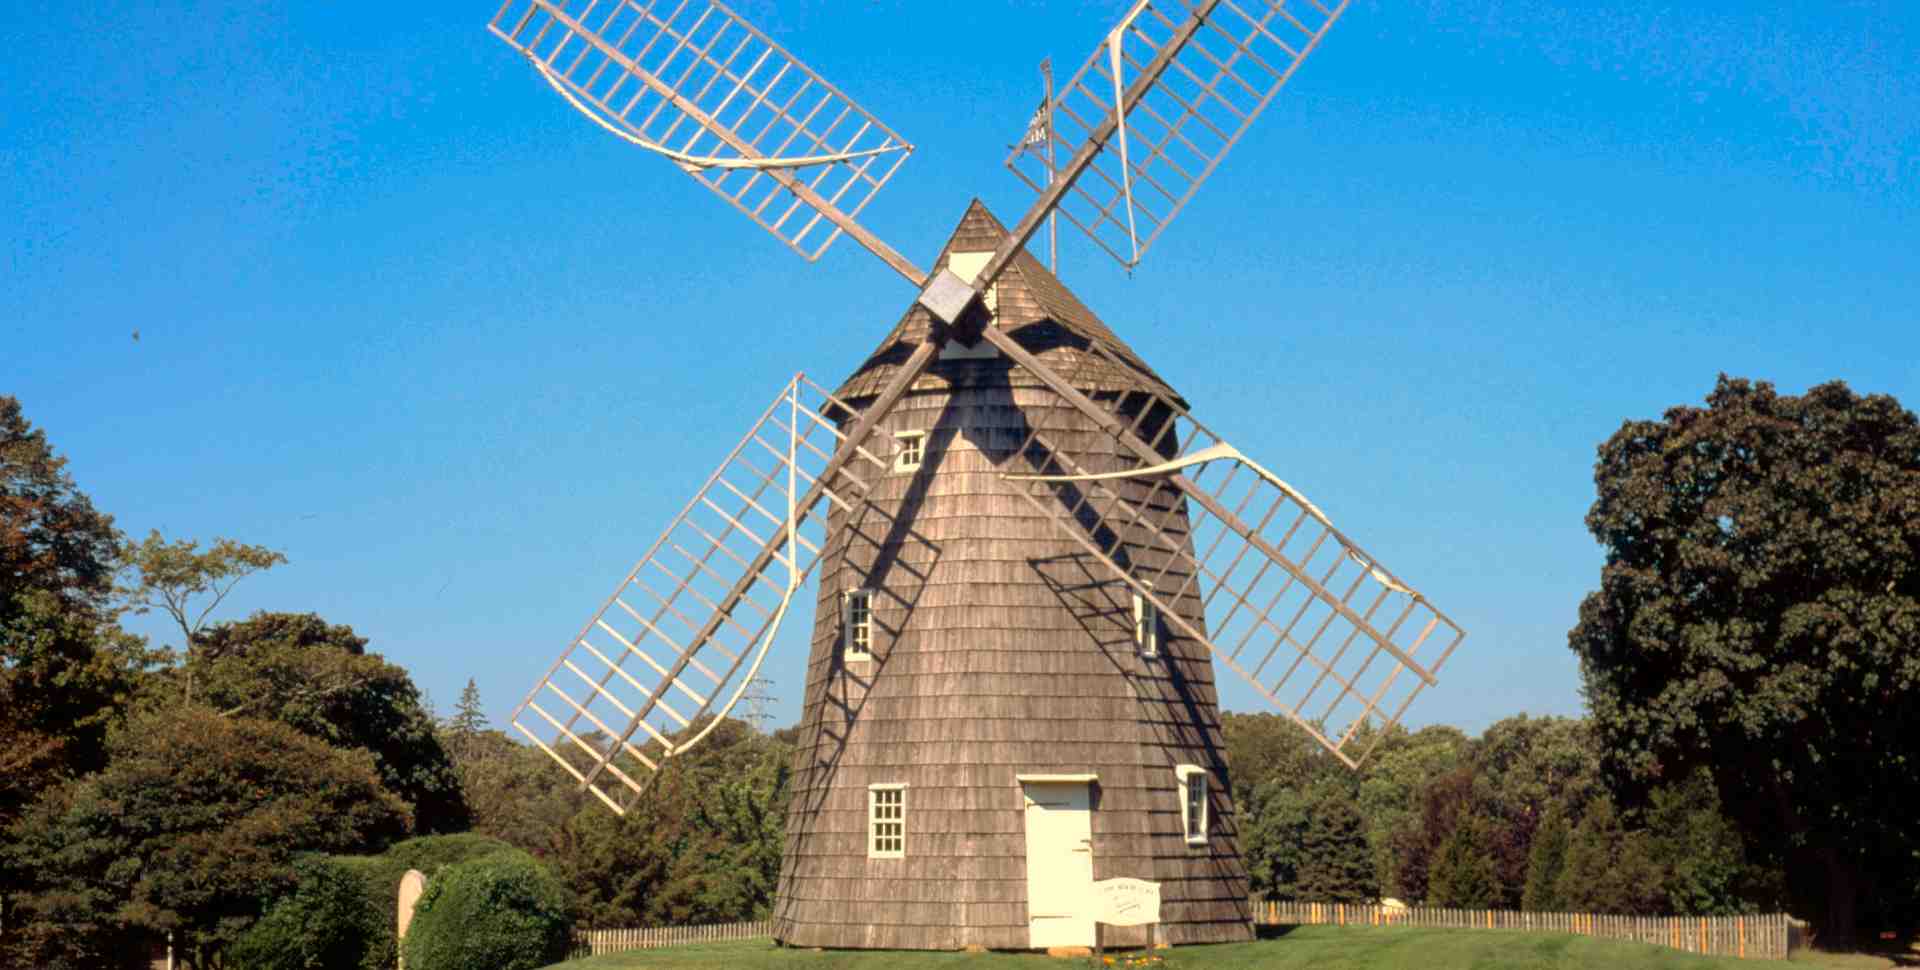 Hook Windmill in East Hampton, New York